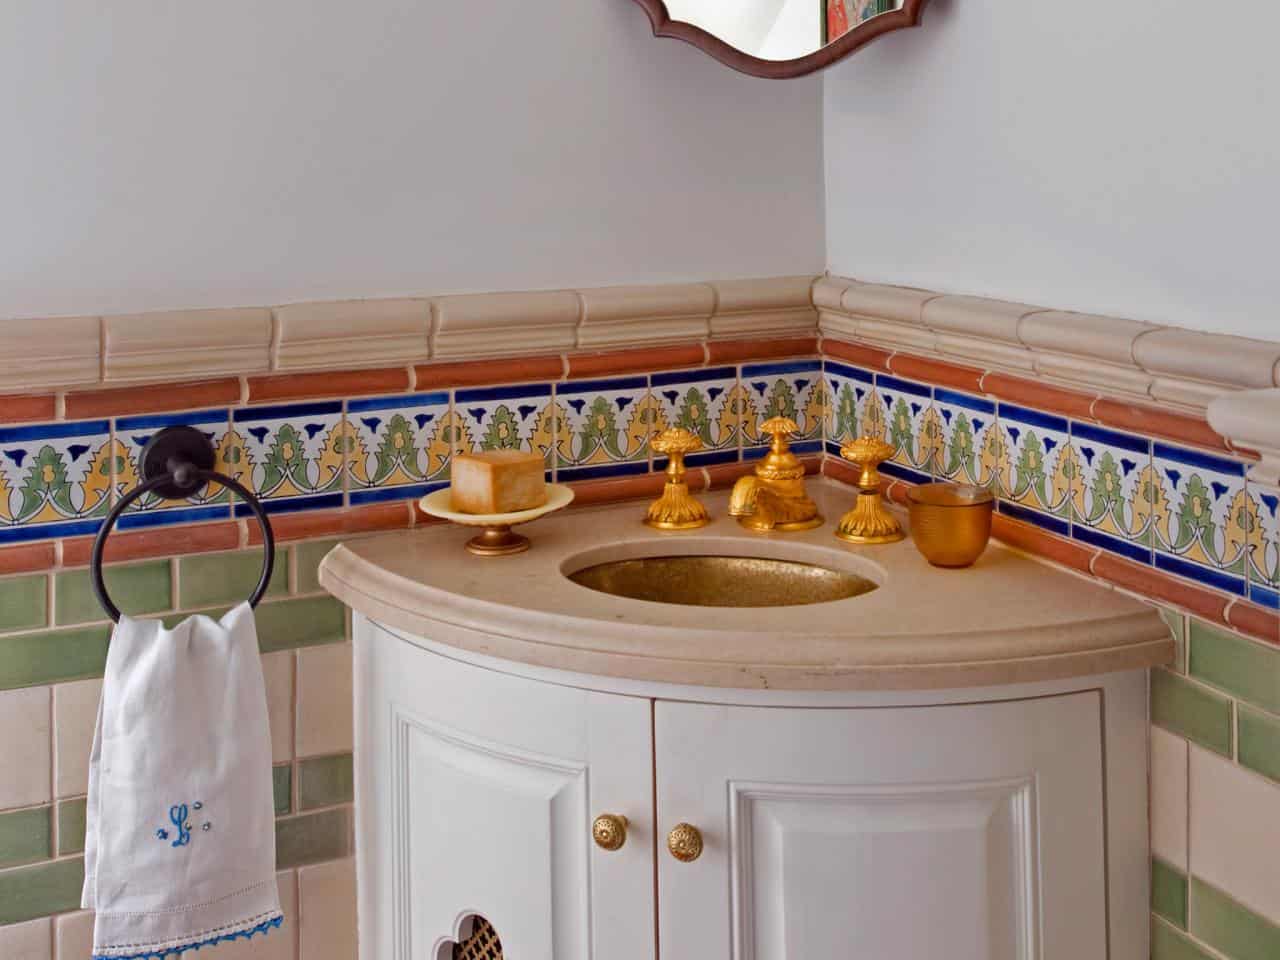 Beautiful corner vanity with gold faucet detailing